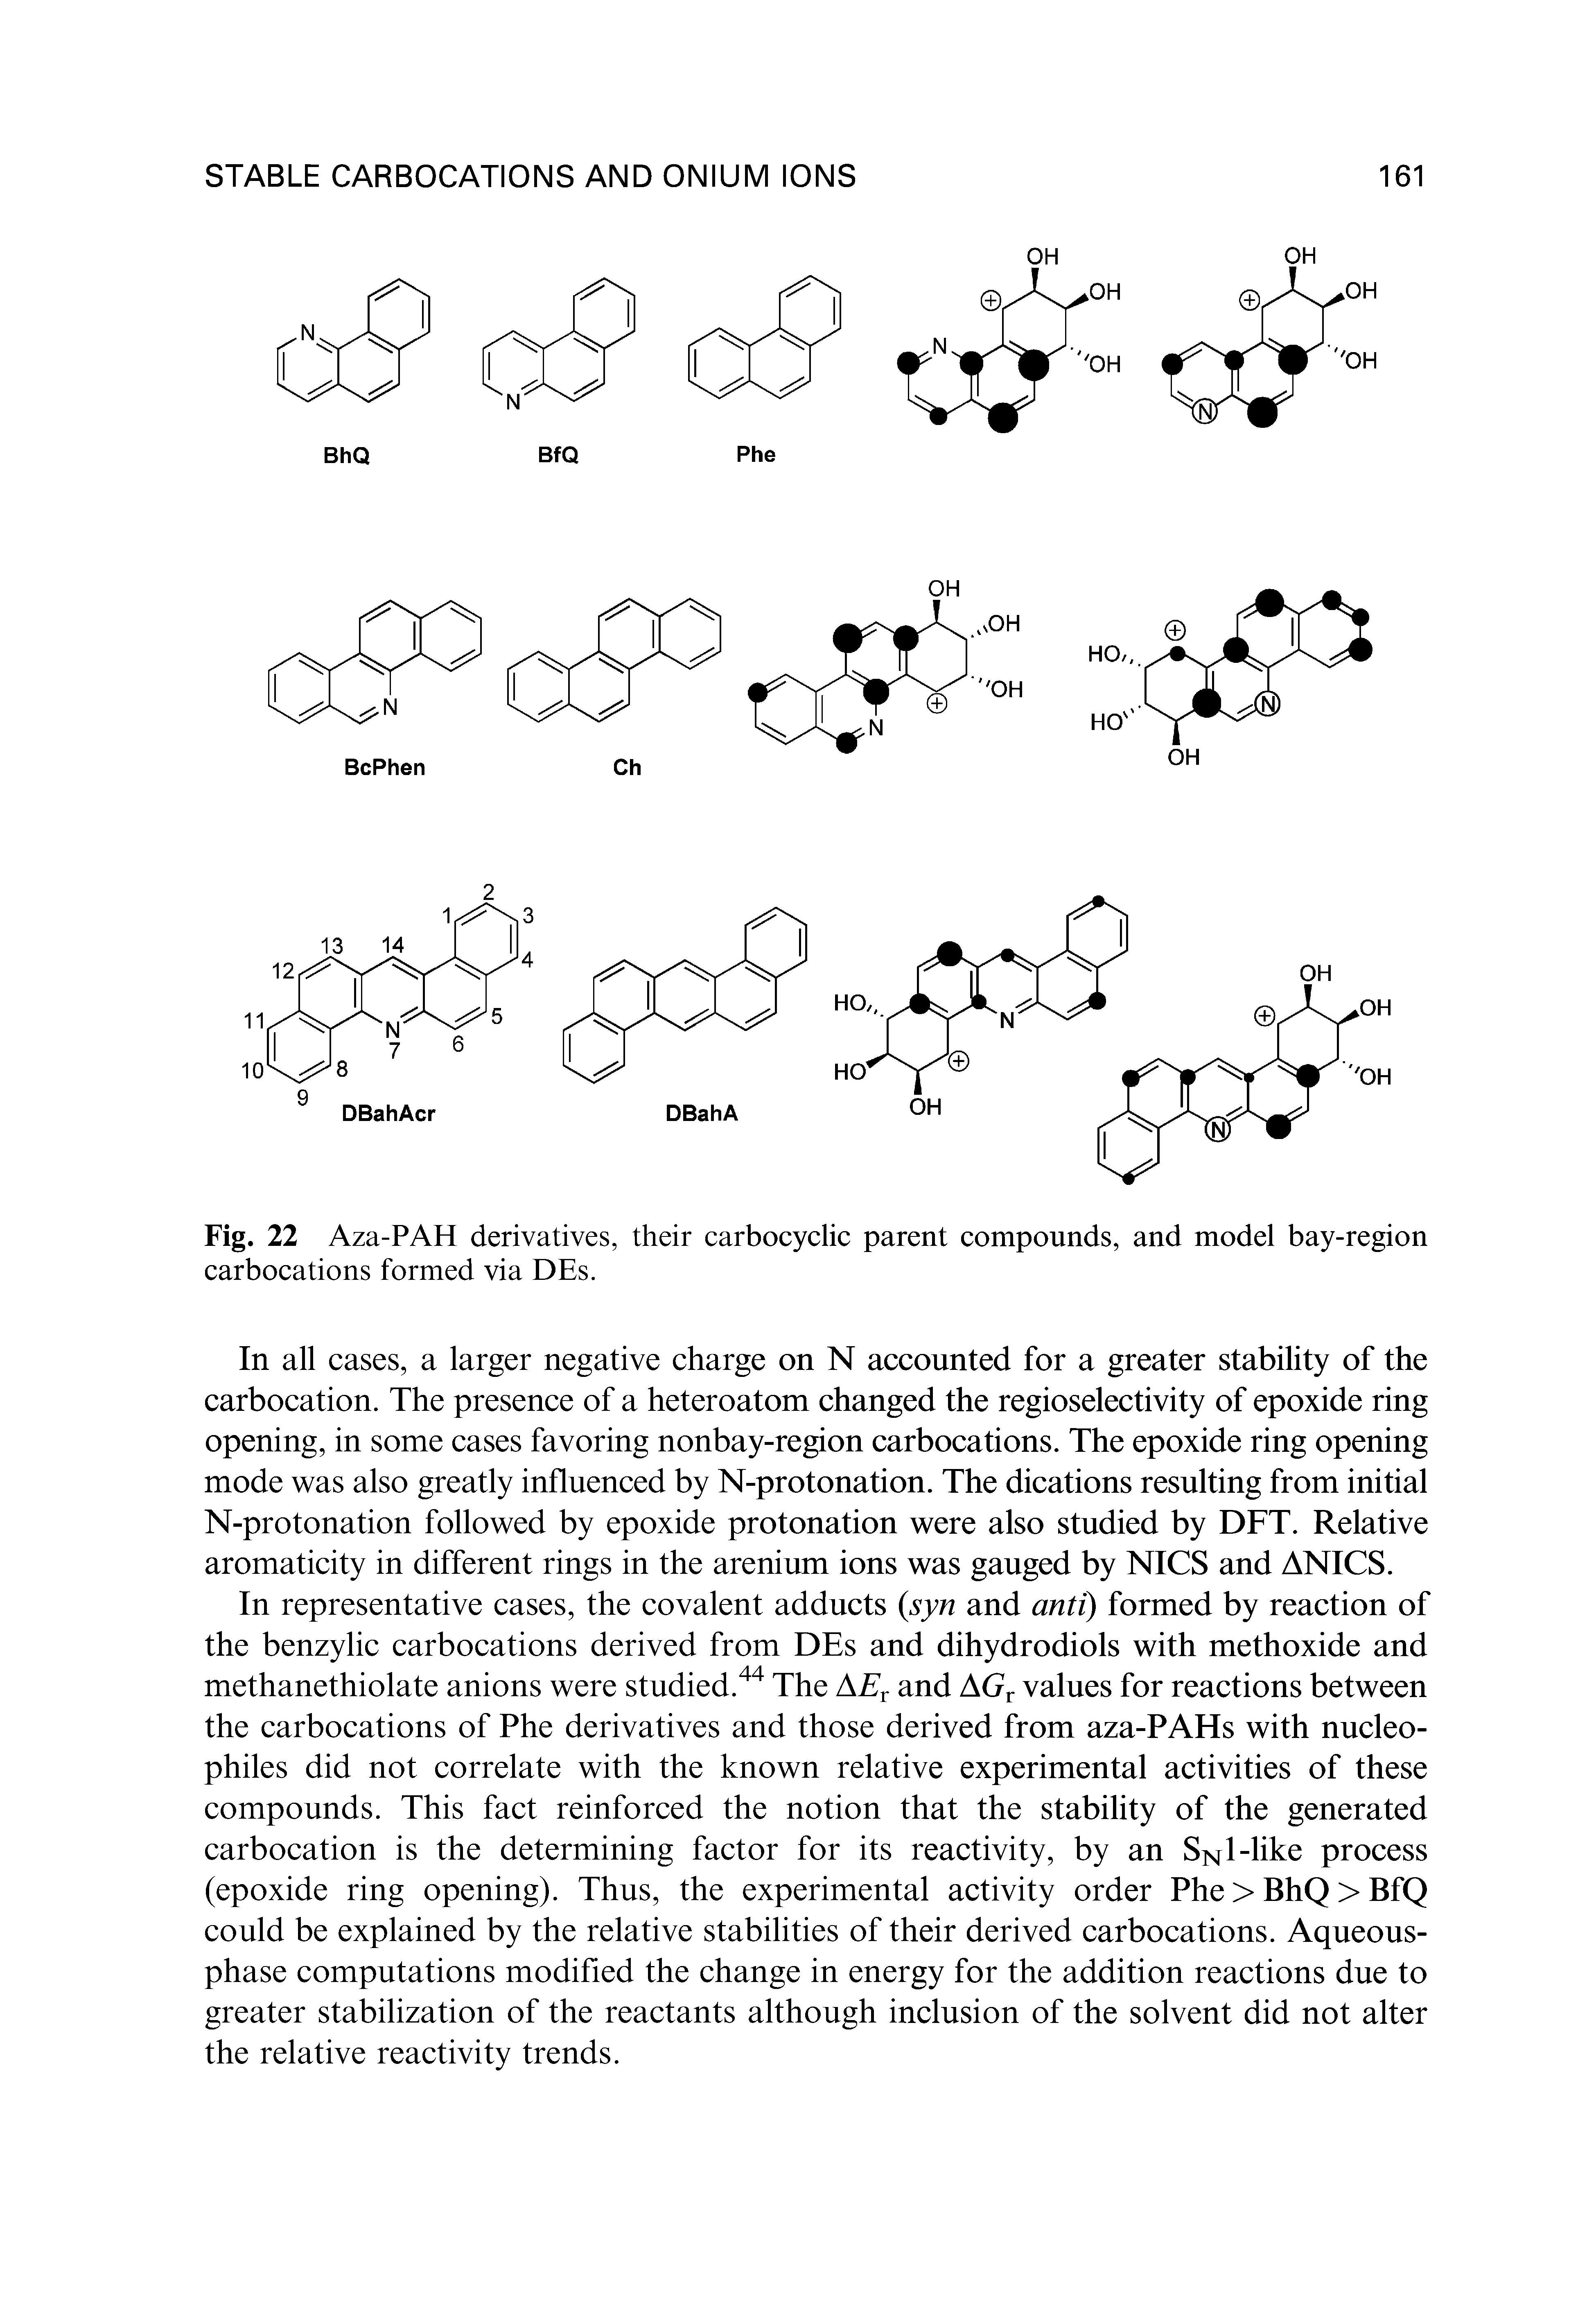 Fig. 22 Aza-PAH derivatives, their carbocyclic parent compounds, and model bay-region carbocations formed via DEs.